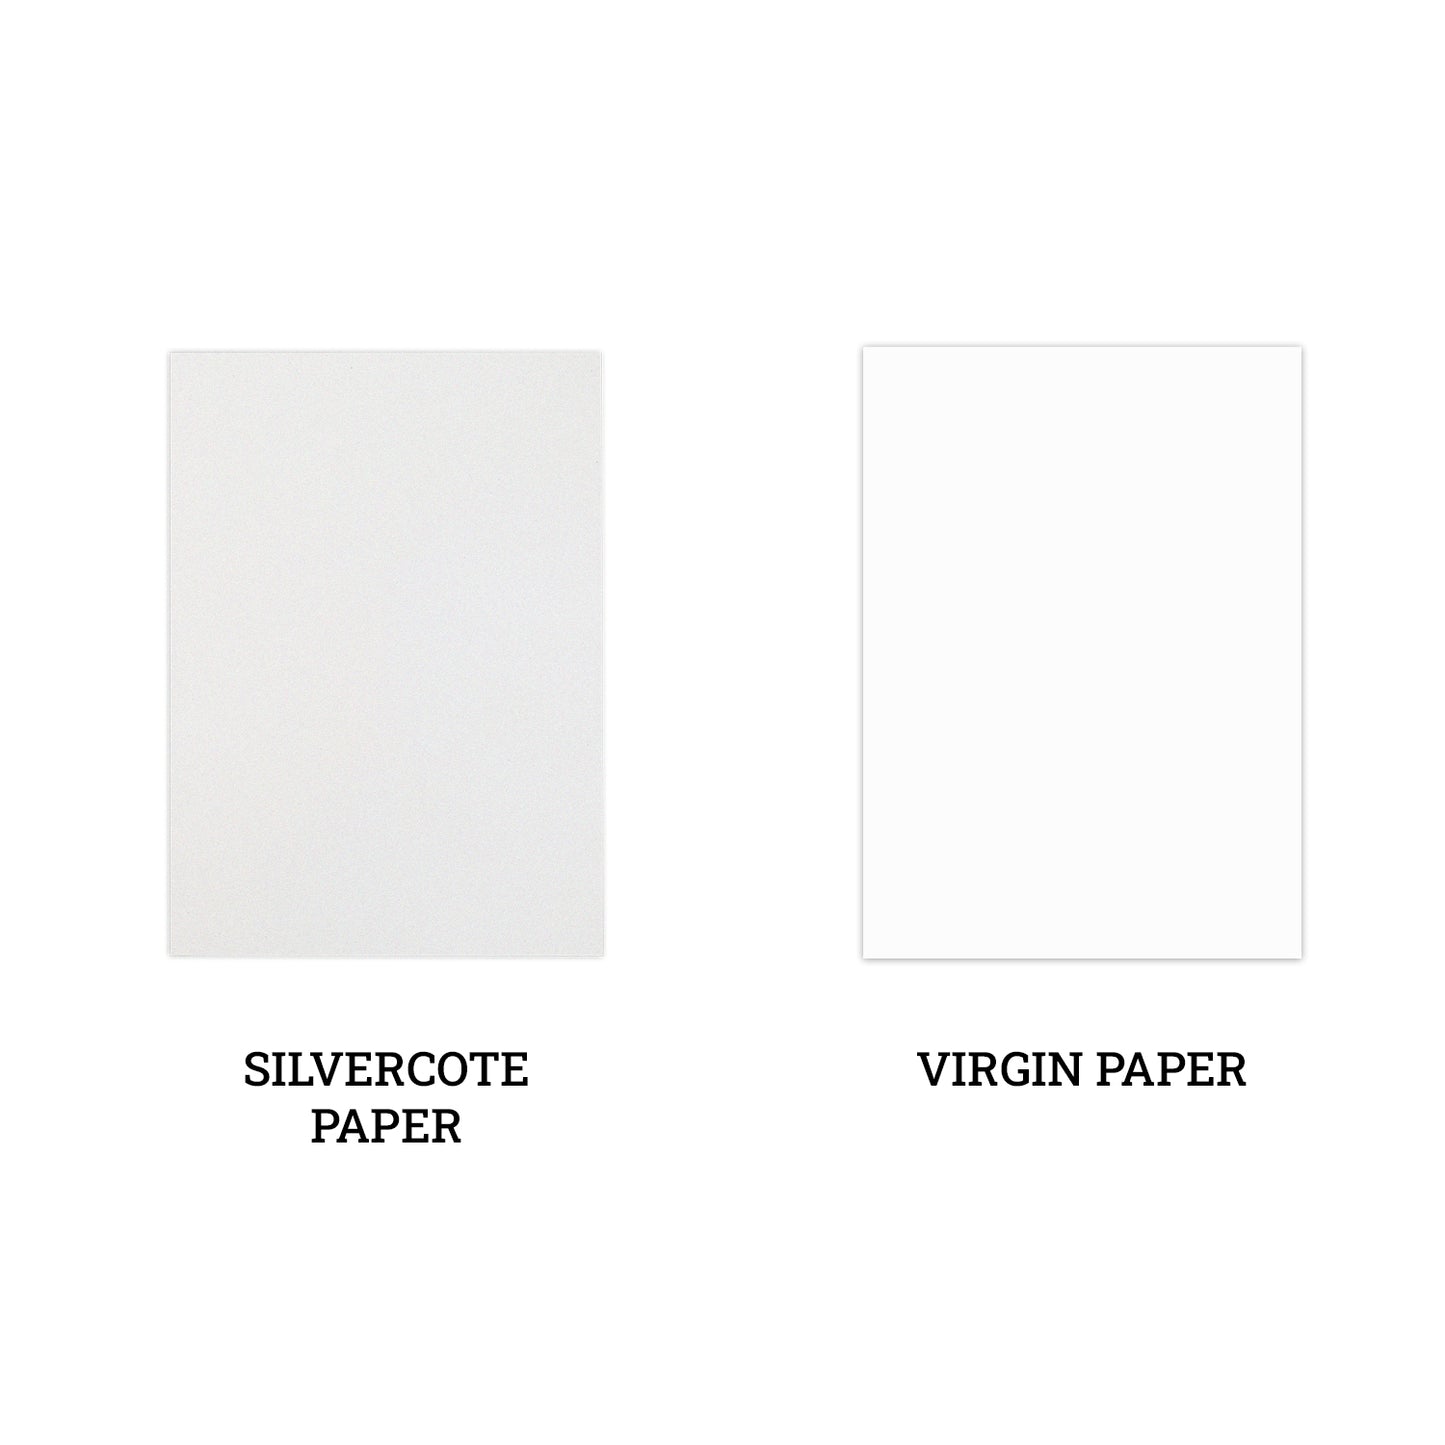 Packmate Silvercote A5 Fotokopi Makinesi, 1 Kağıt Topu, 500 Sayfa